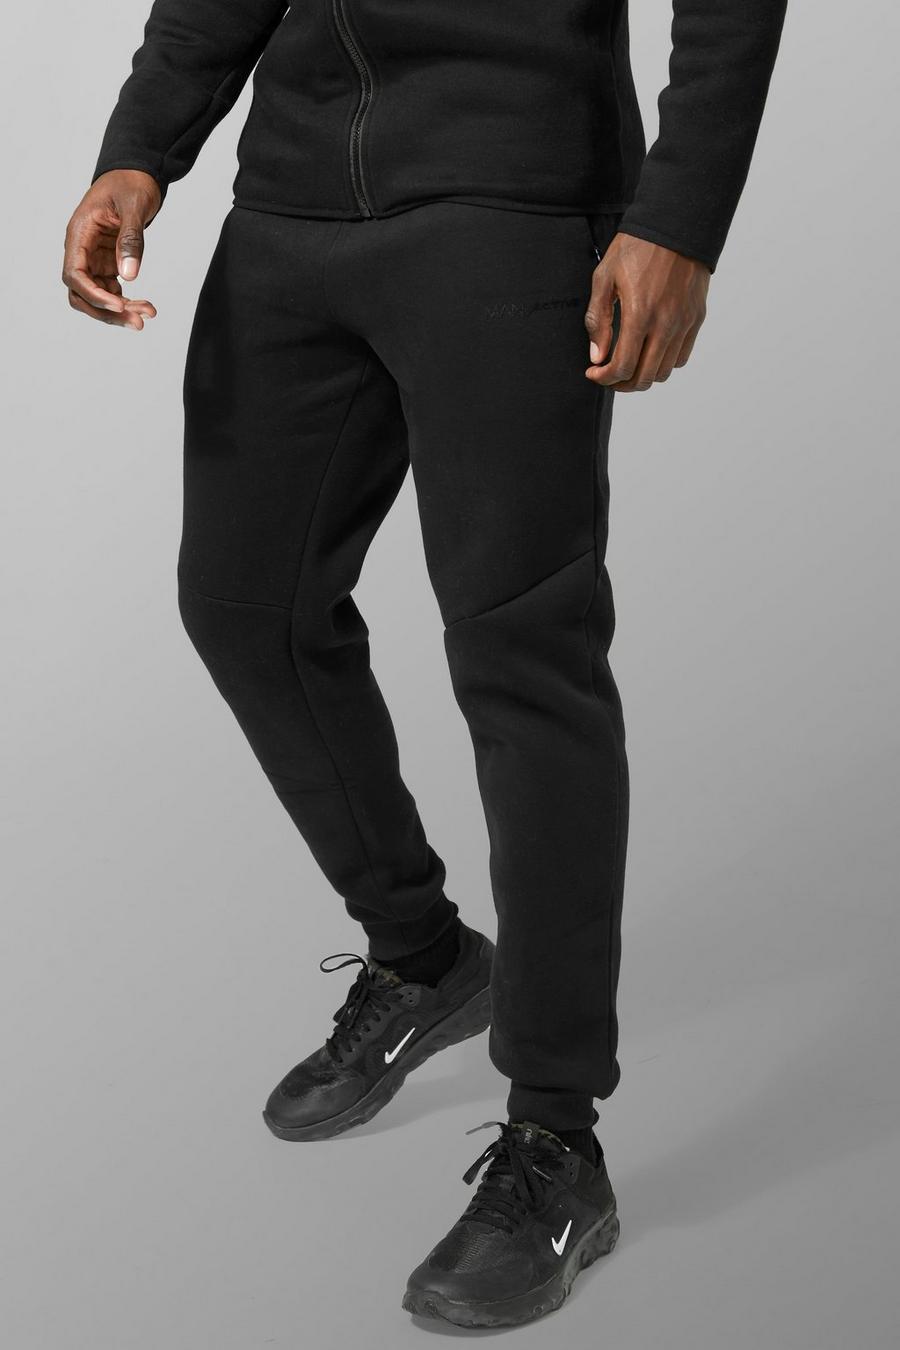 Black negro מכנסי ריצה ספורטיביים בגזרת קרסול צרה עם כיתוב Man